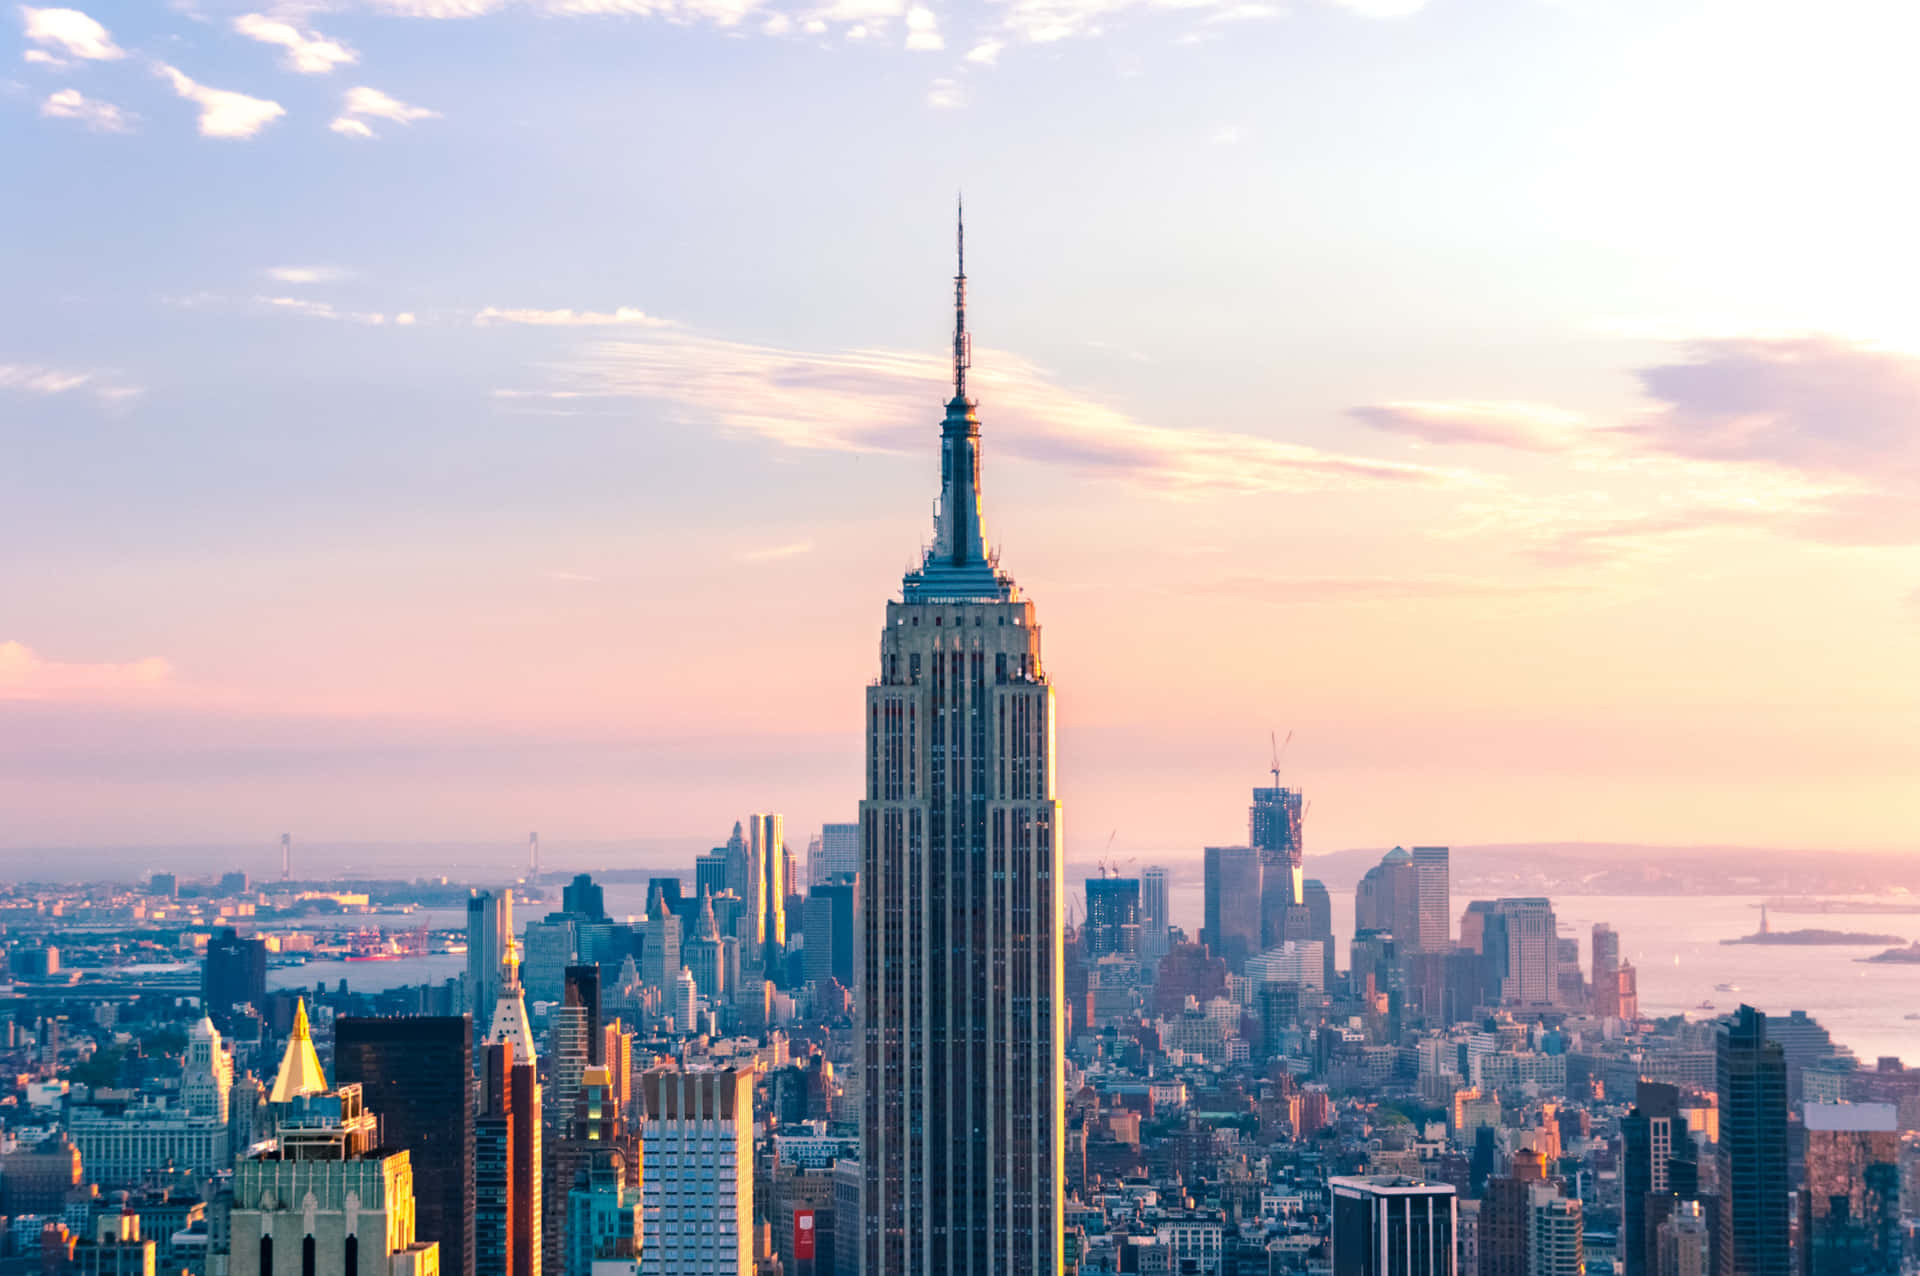 Dasikonische Empire State Building In New York City